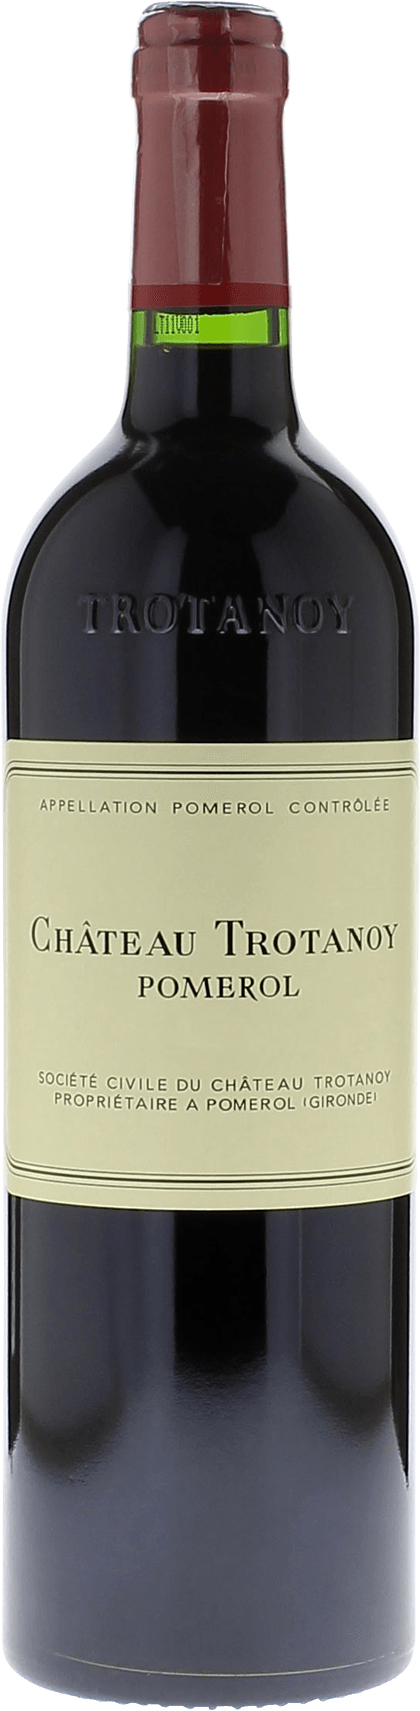 Trotanoy 1987  Pomerol, Bordeaux rouge